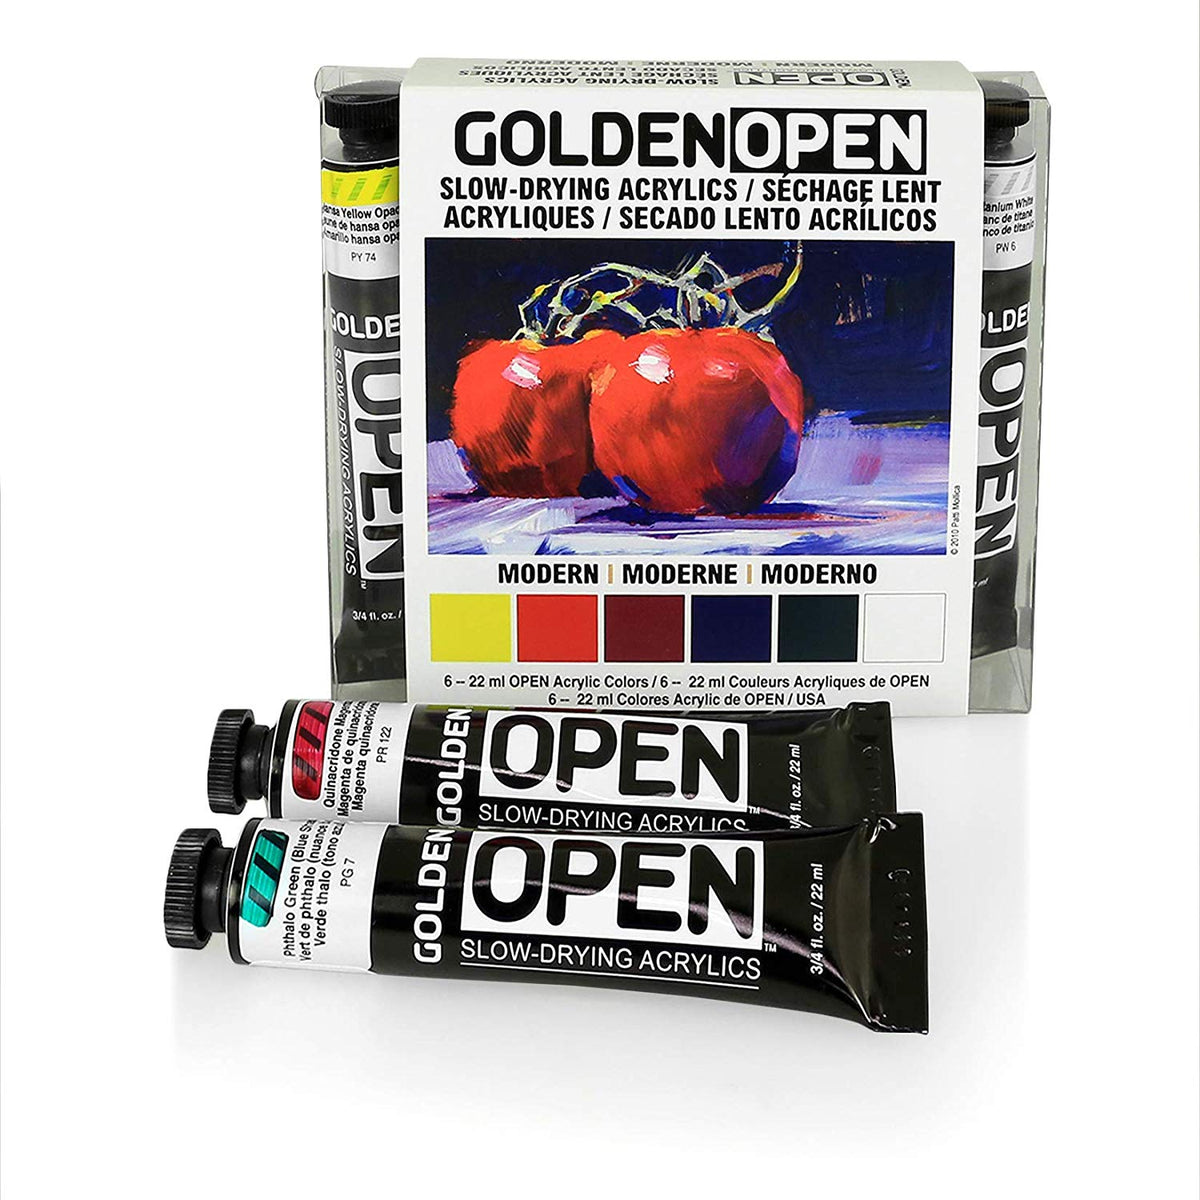 GOLDEN Open Acrylic Paint Sets